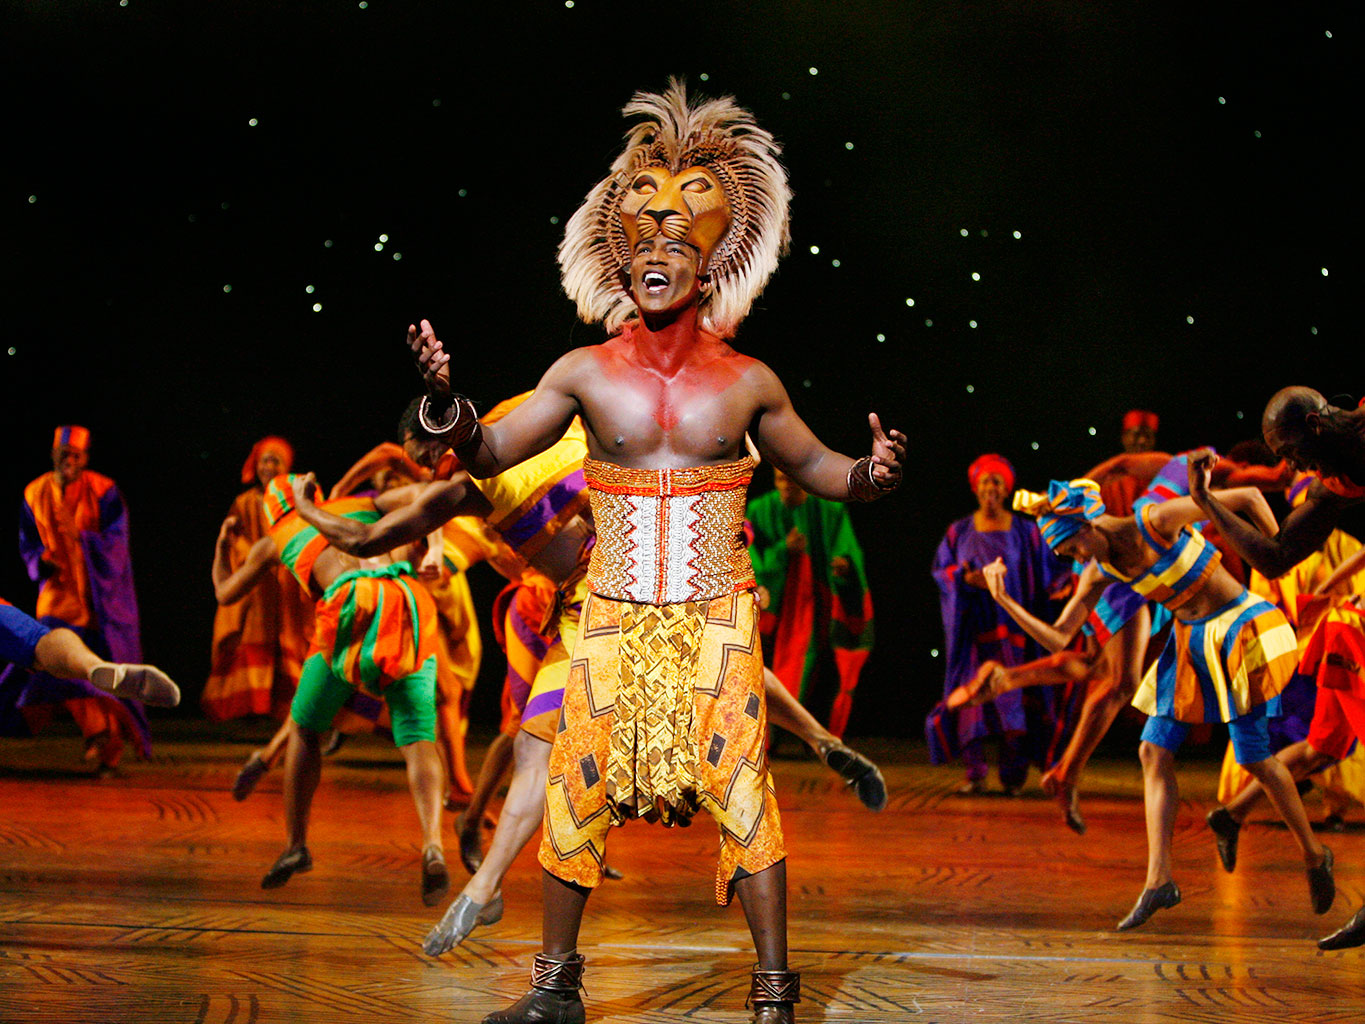 download the lion king broadway tour